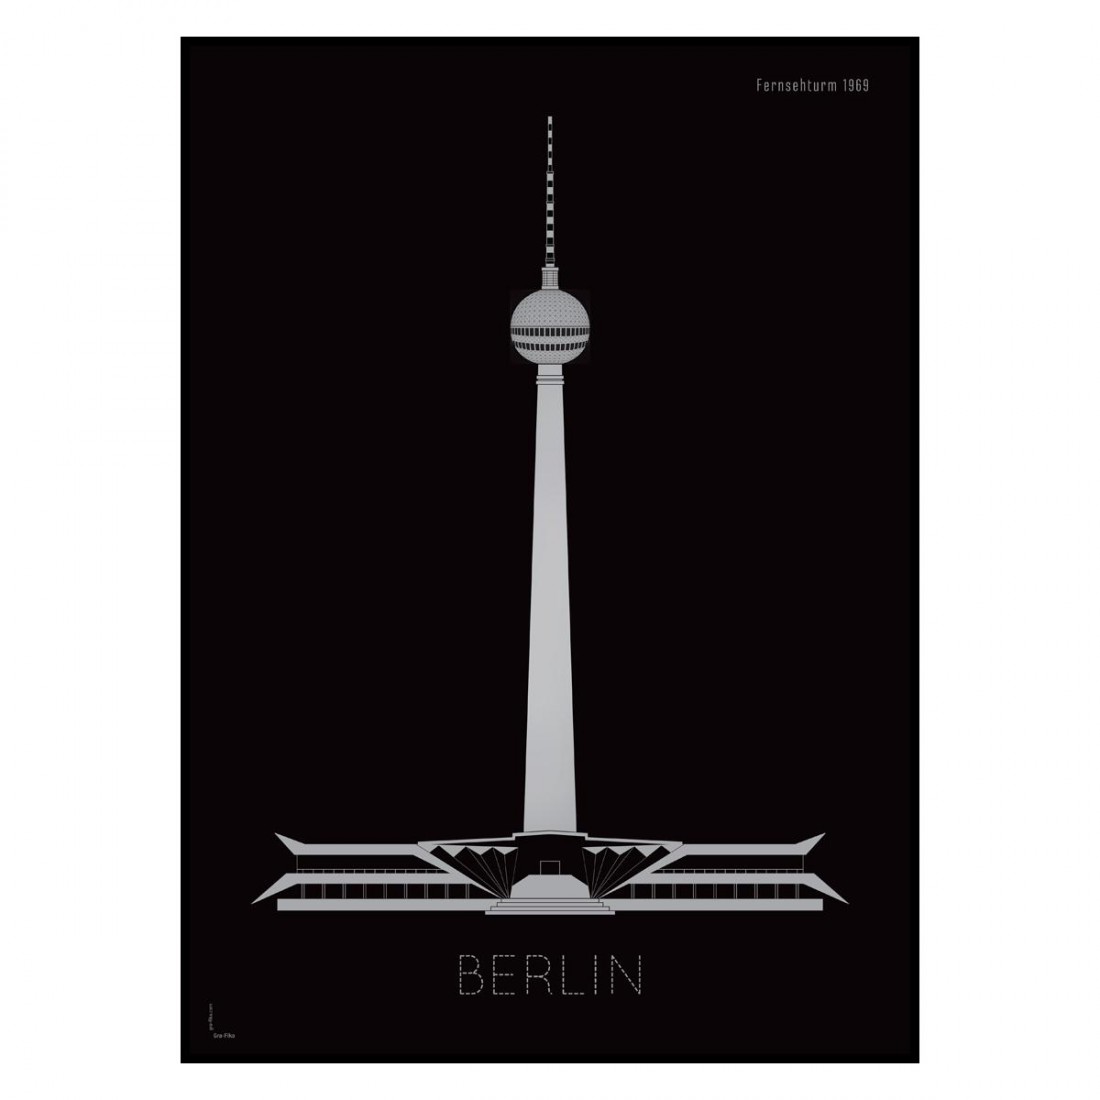 Grafika Berlin by night / Fernsehturm